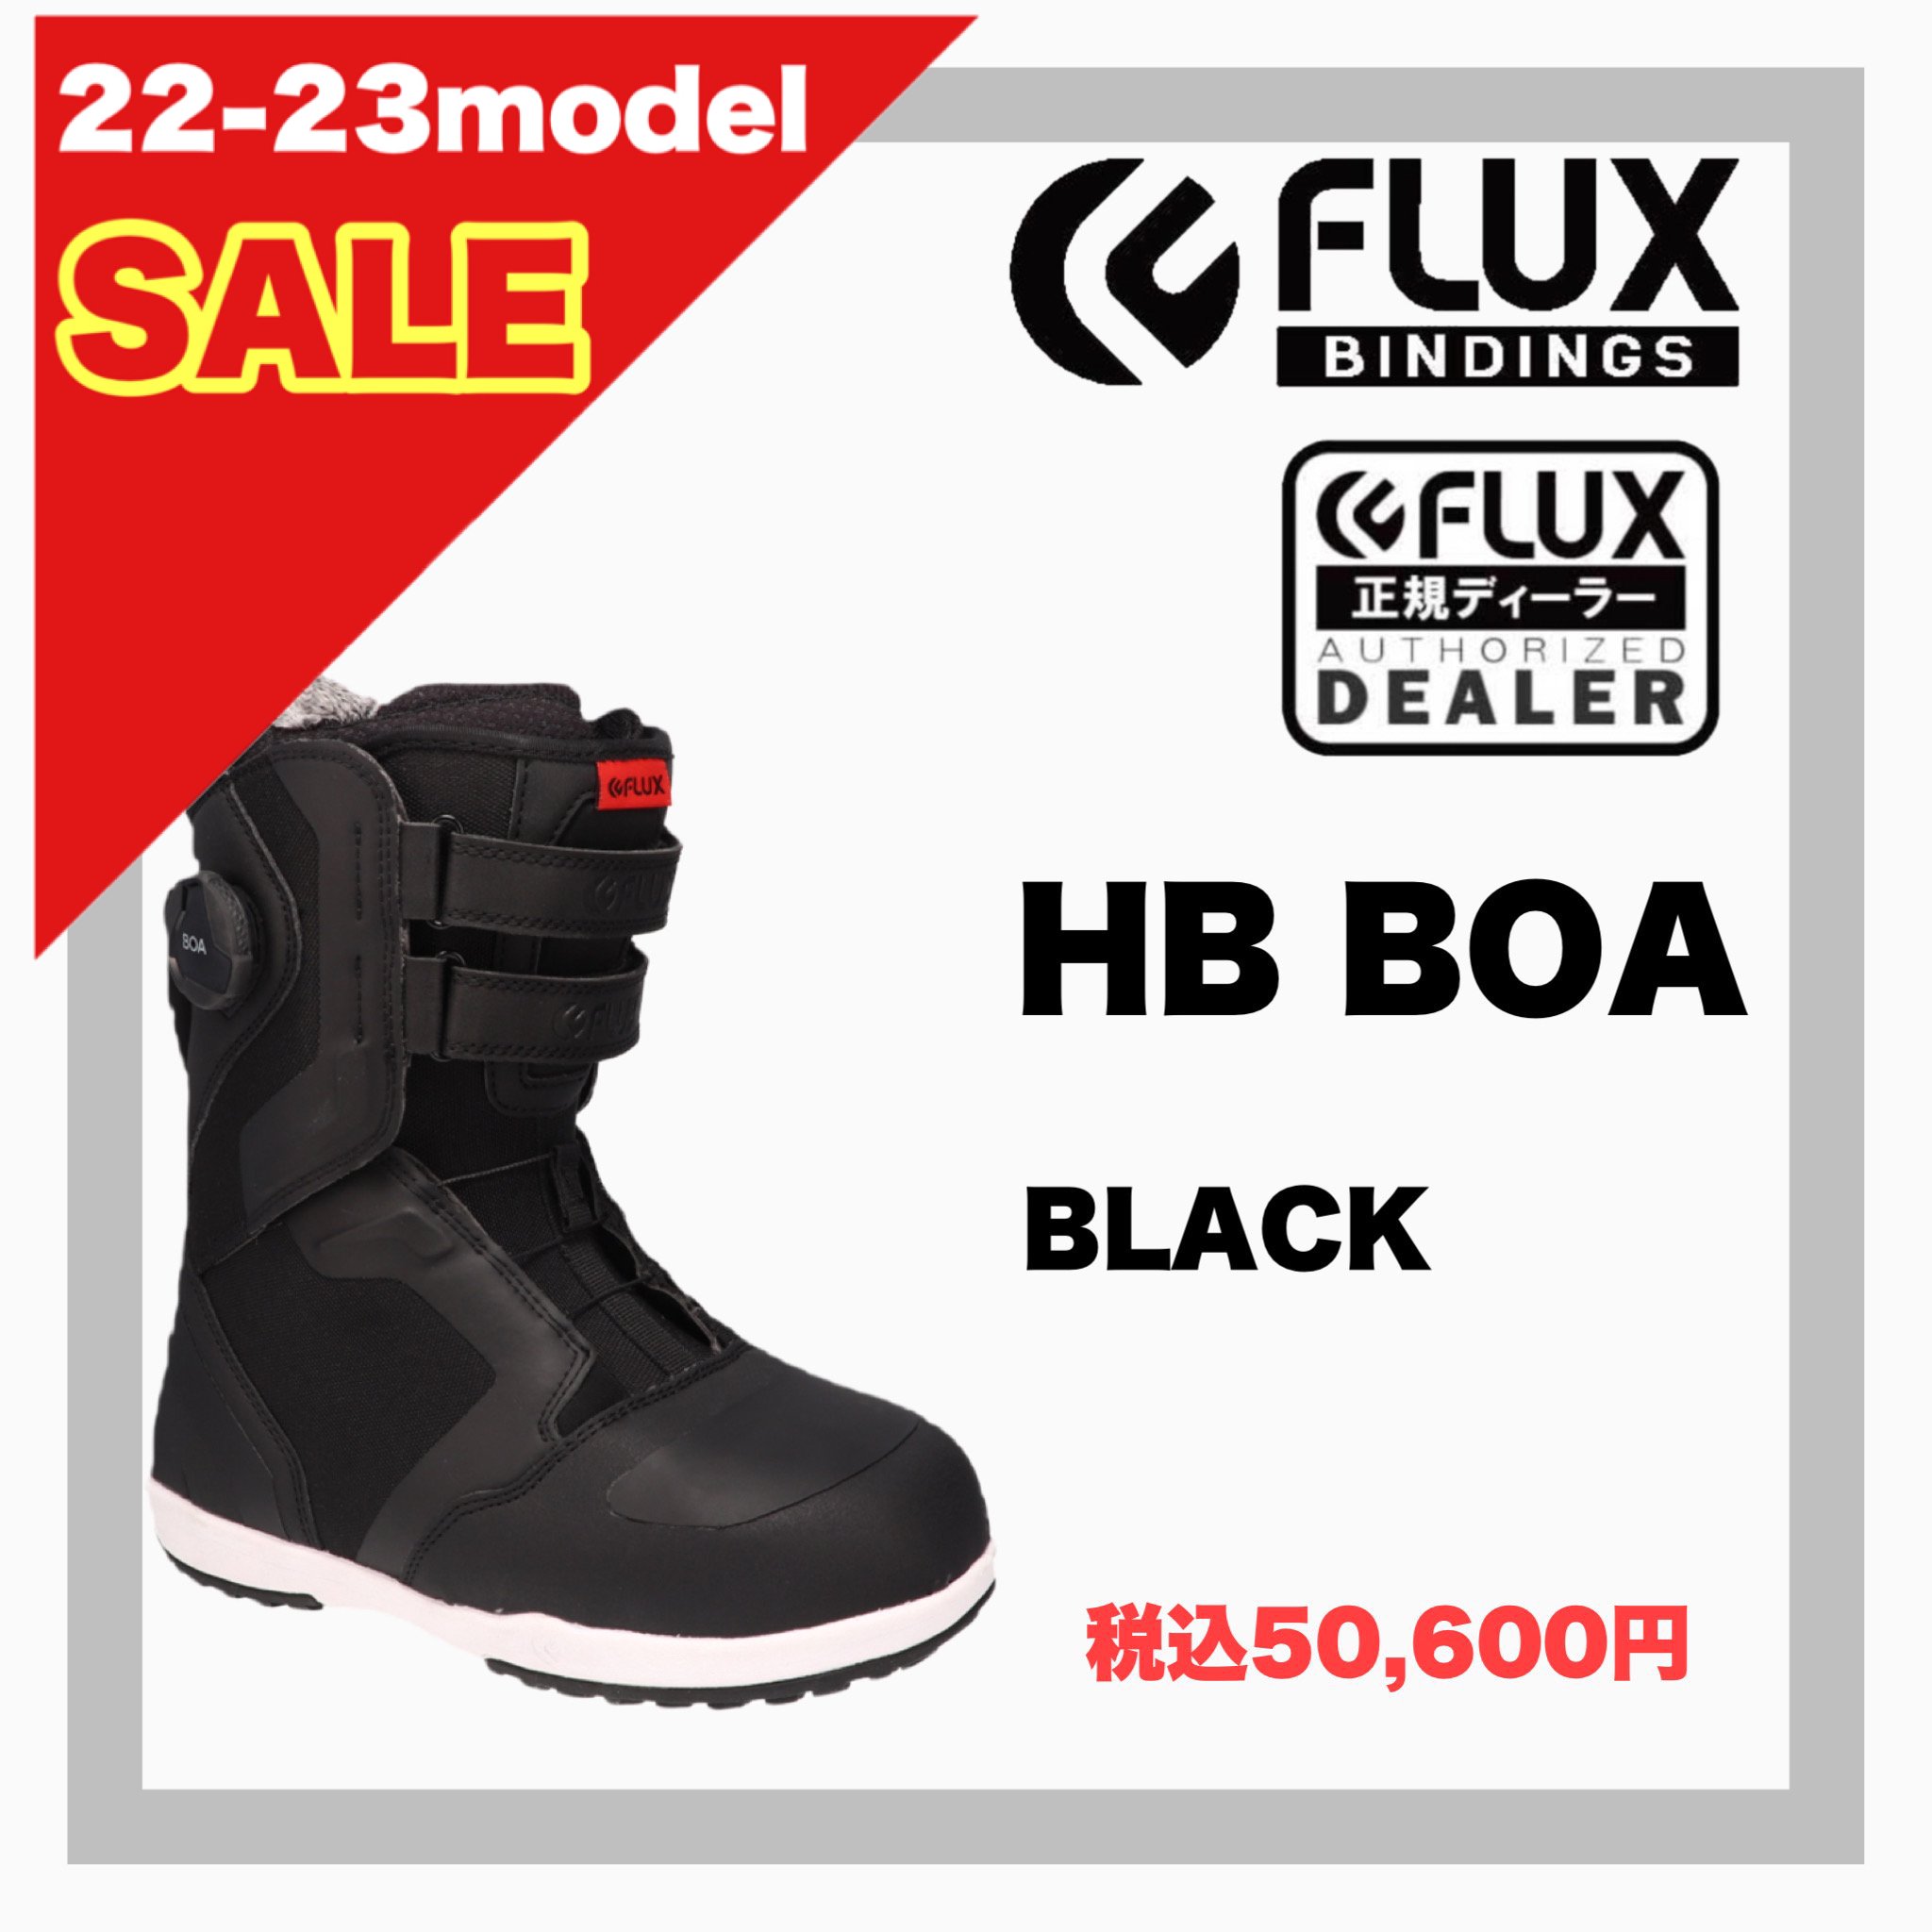 FLUX HB-BOA 22-23モデル · www.cetraslp.gob.mx